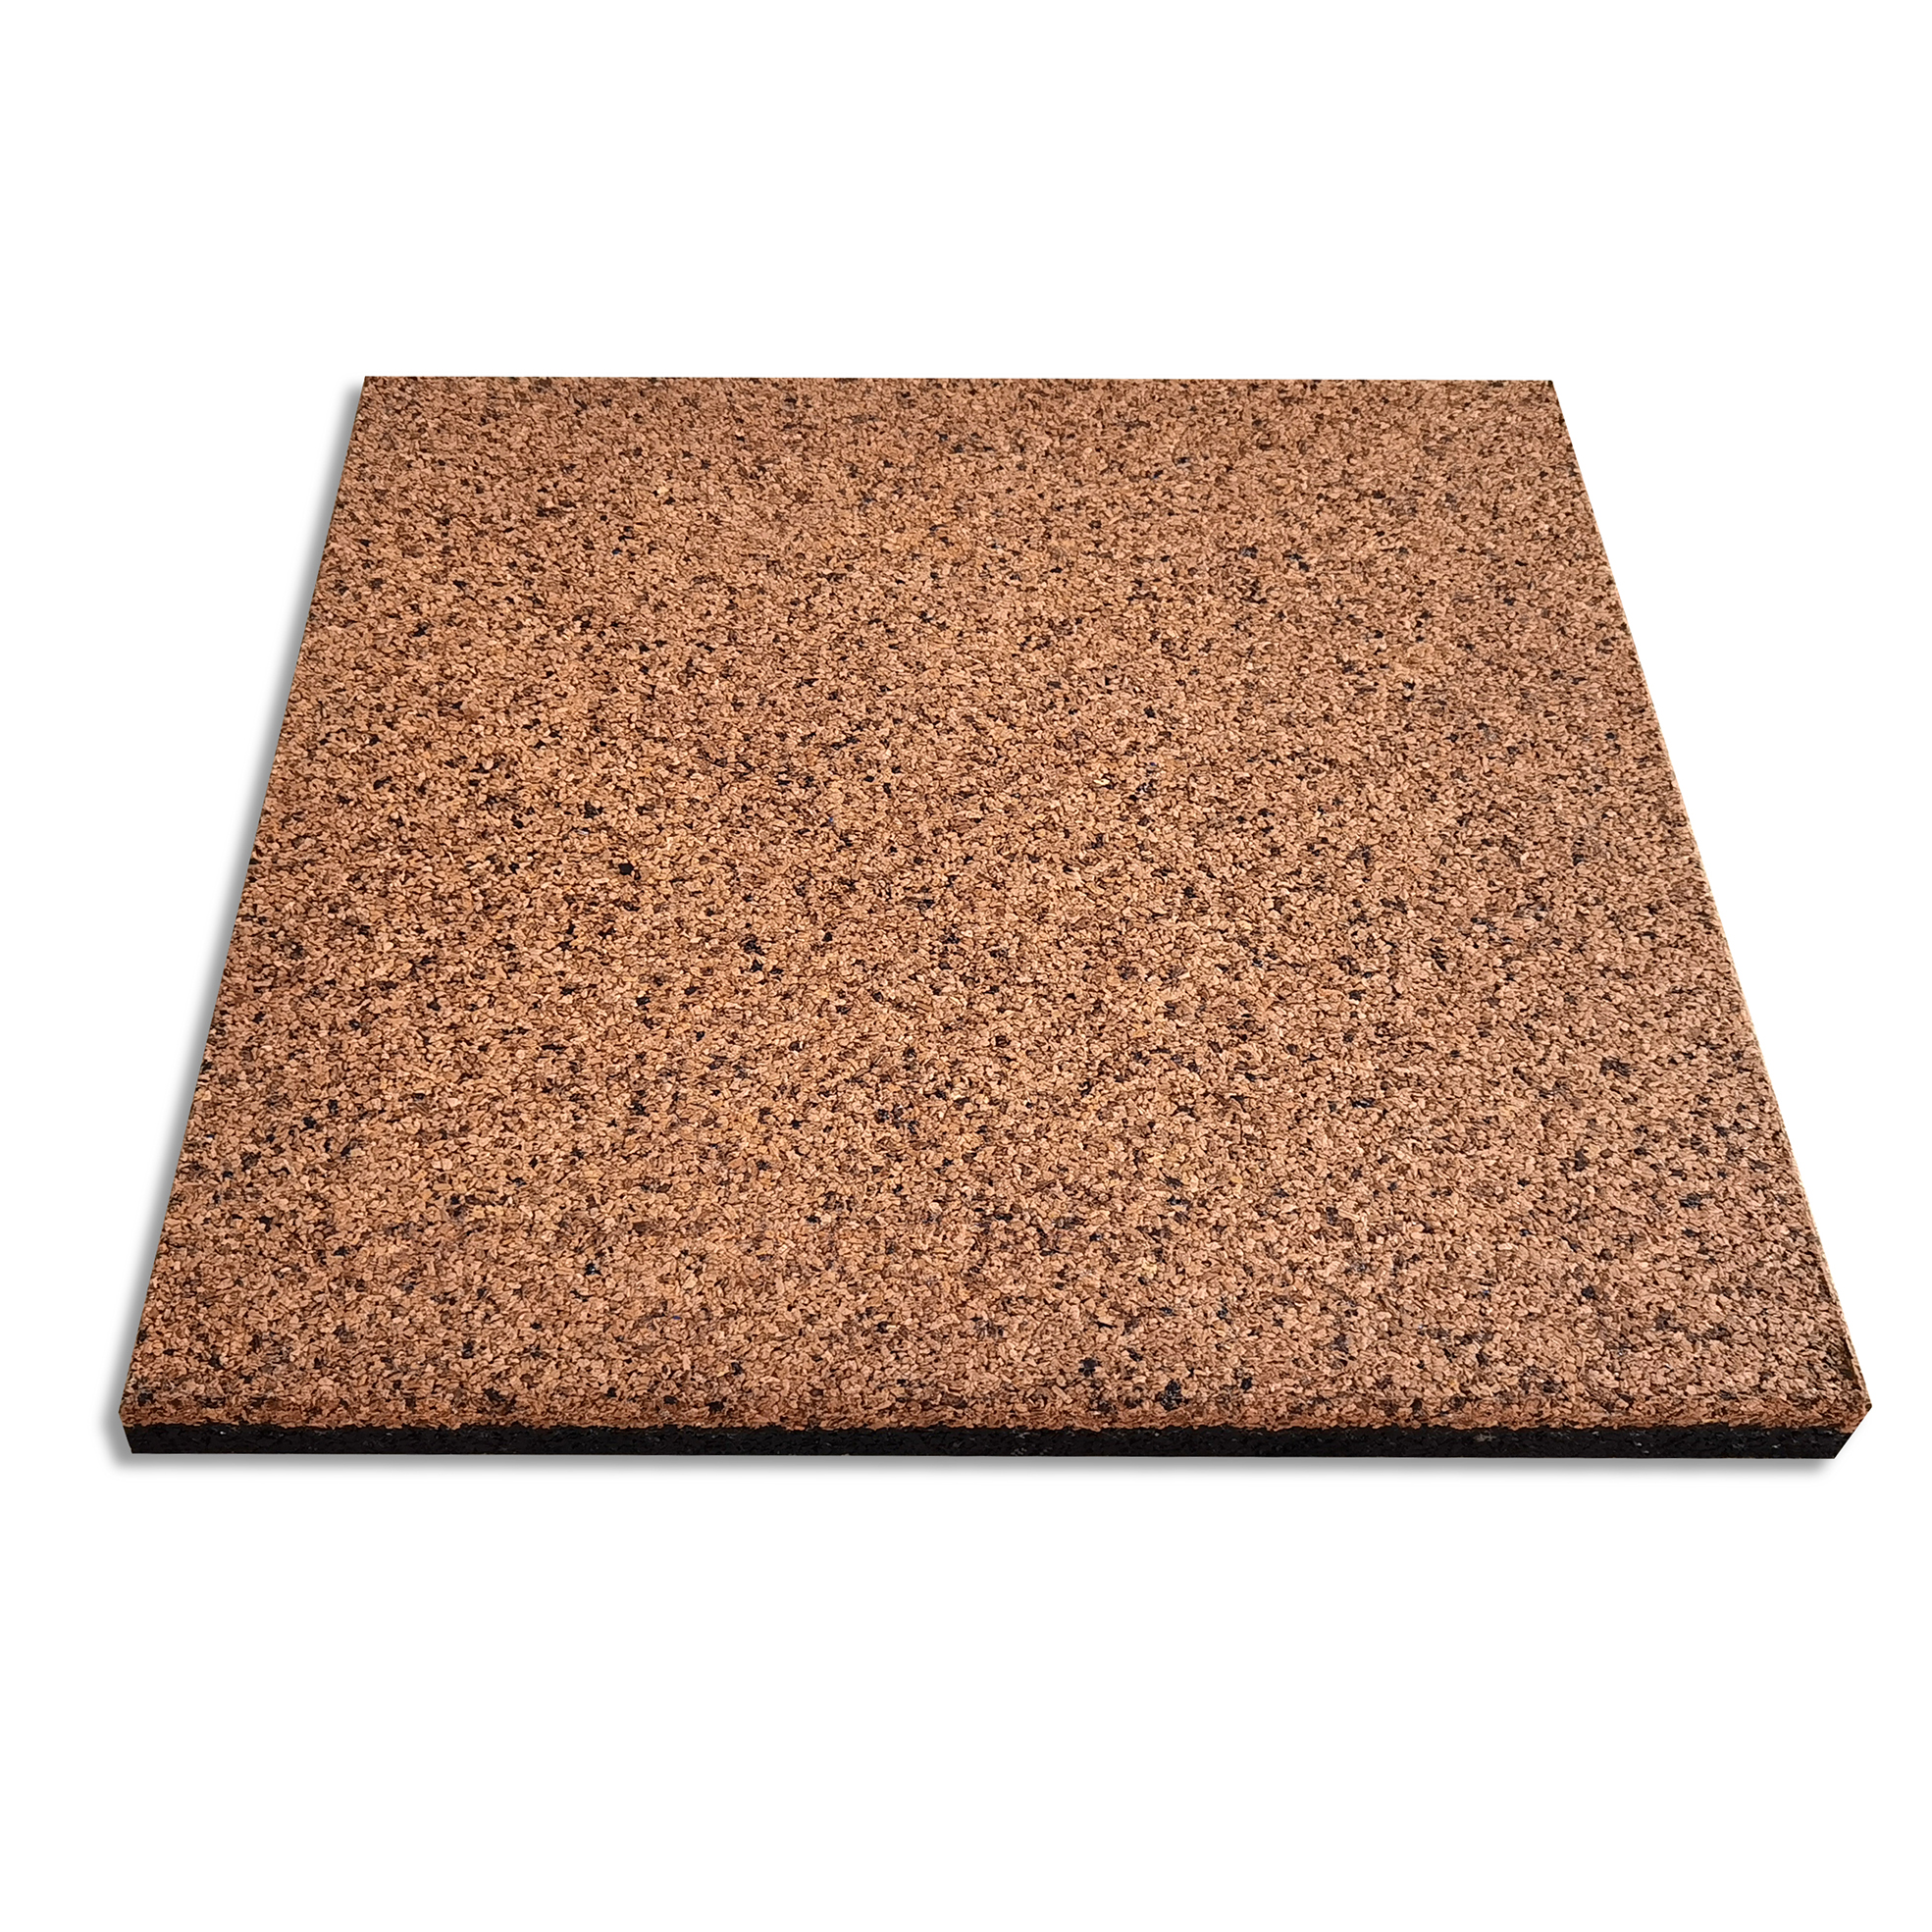 Cork rubber tiles